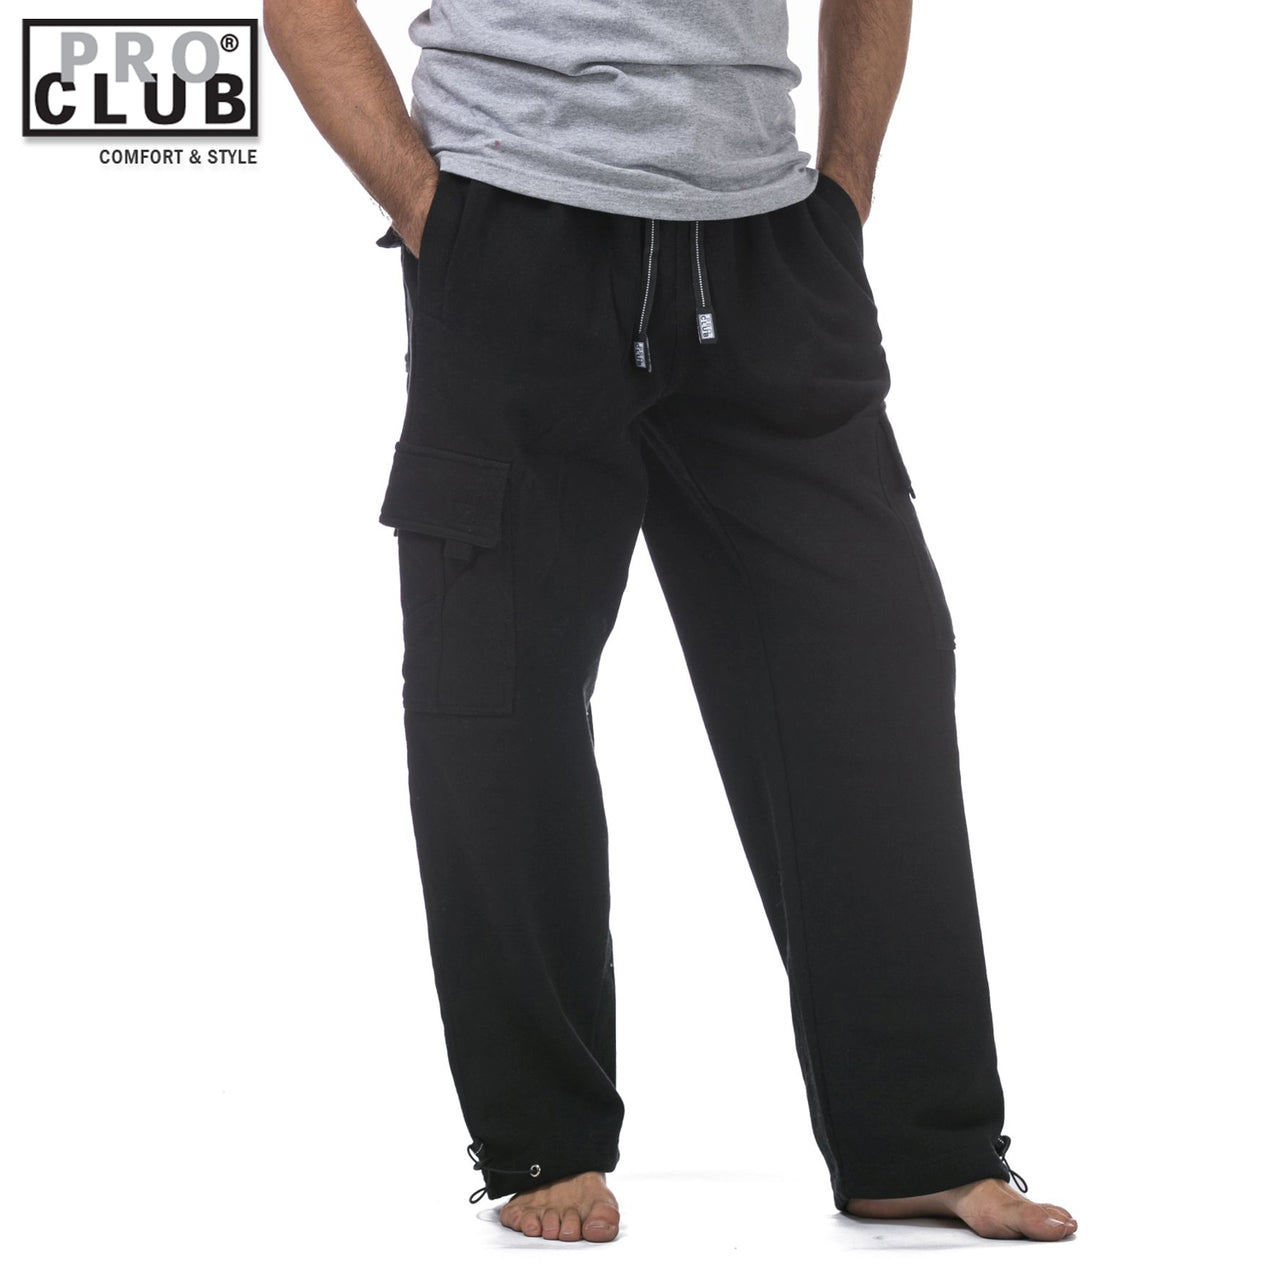 Pro Club Women's Comfort Sweat Pants